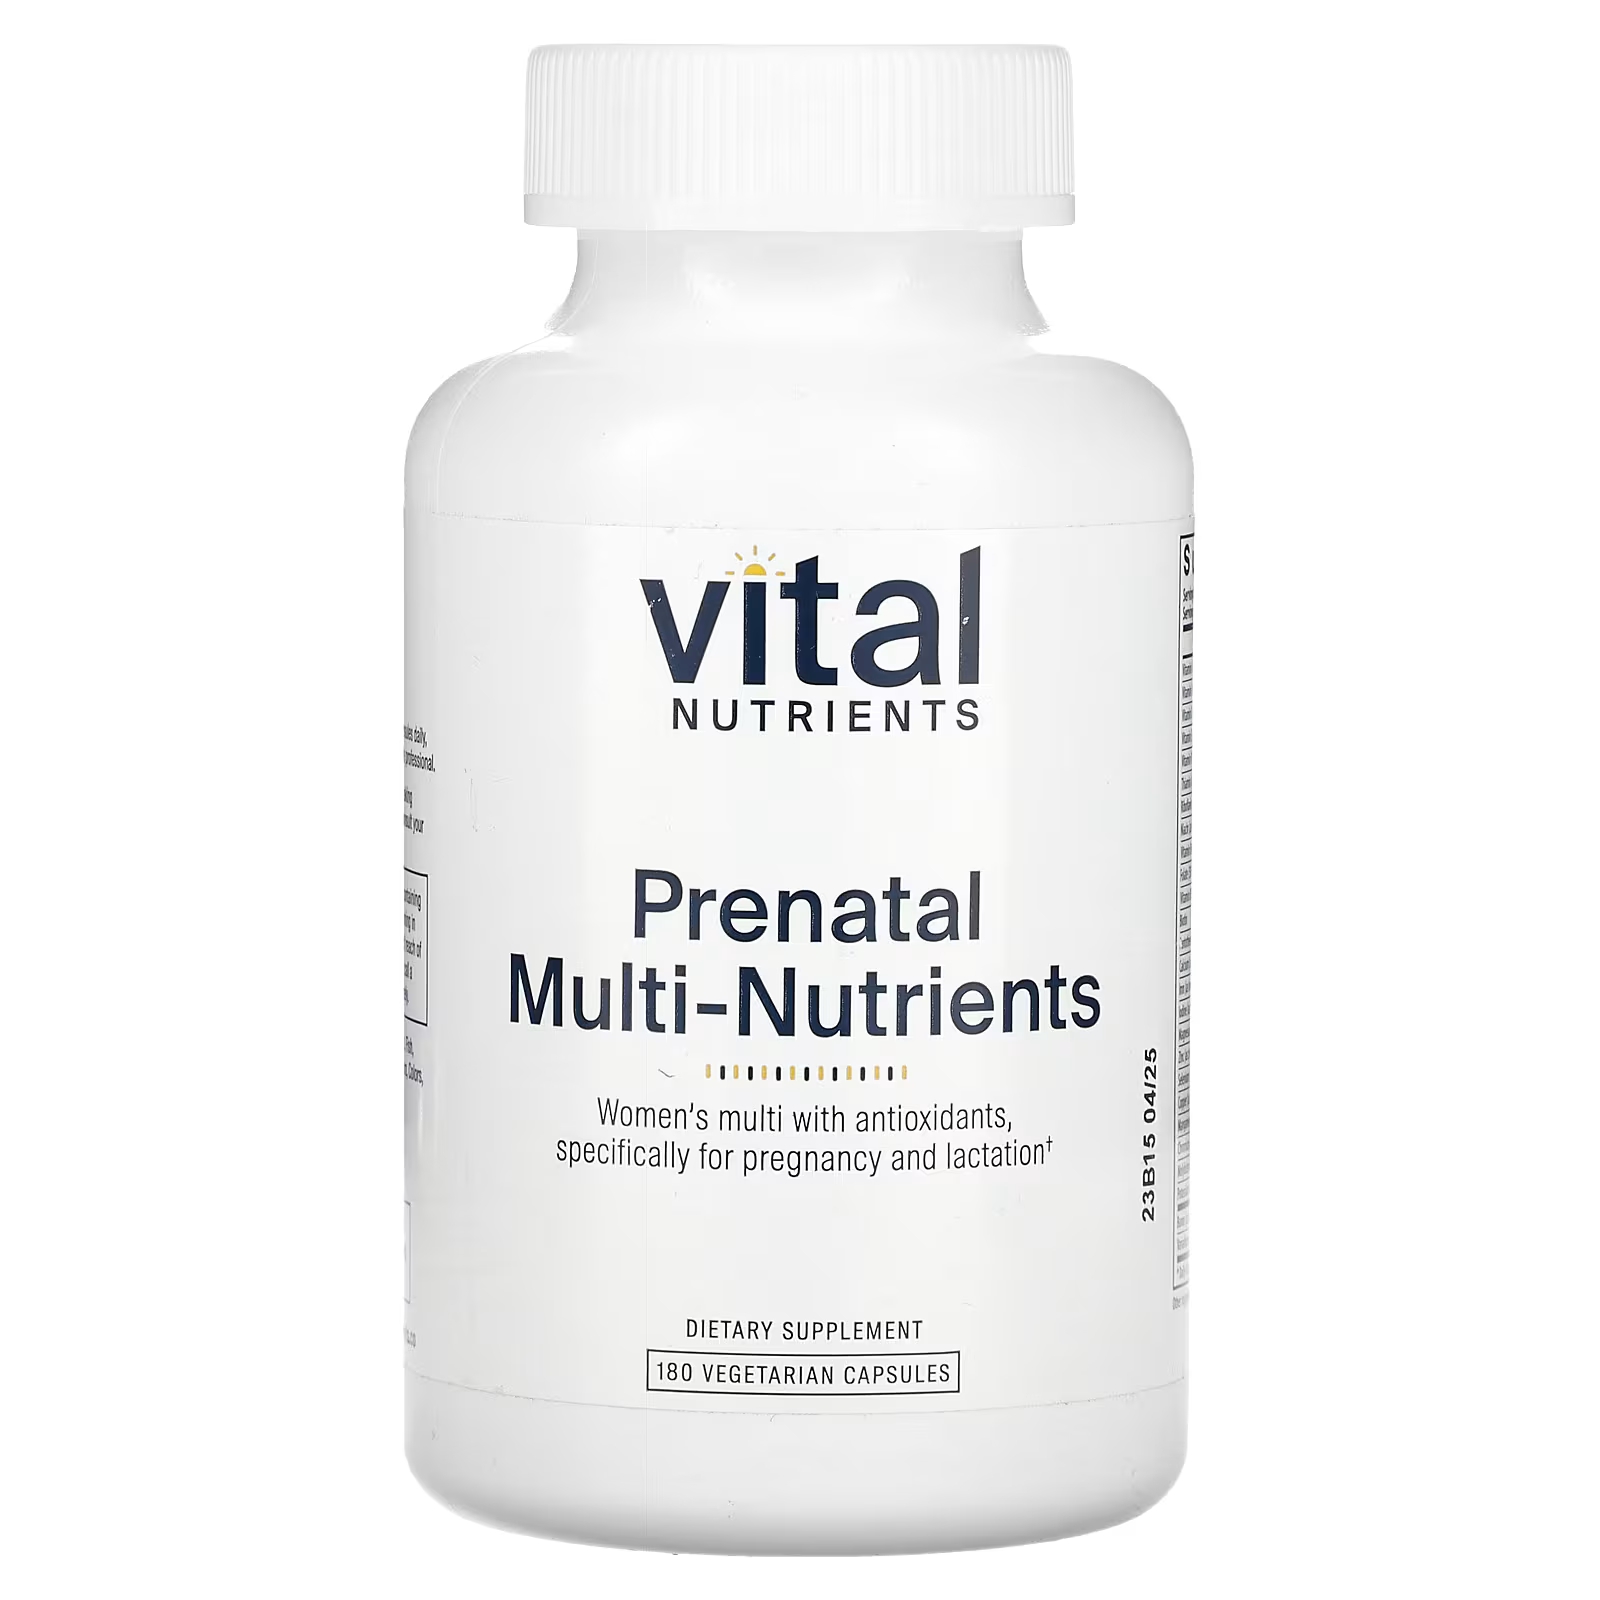 Пищевая добавка Vital Nutrients Prenatal Multi-Nutrients, 180 капсул витамины антиоксиданты минералы эвалар бета аланин